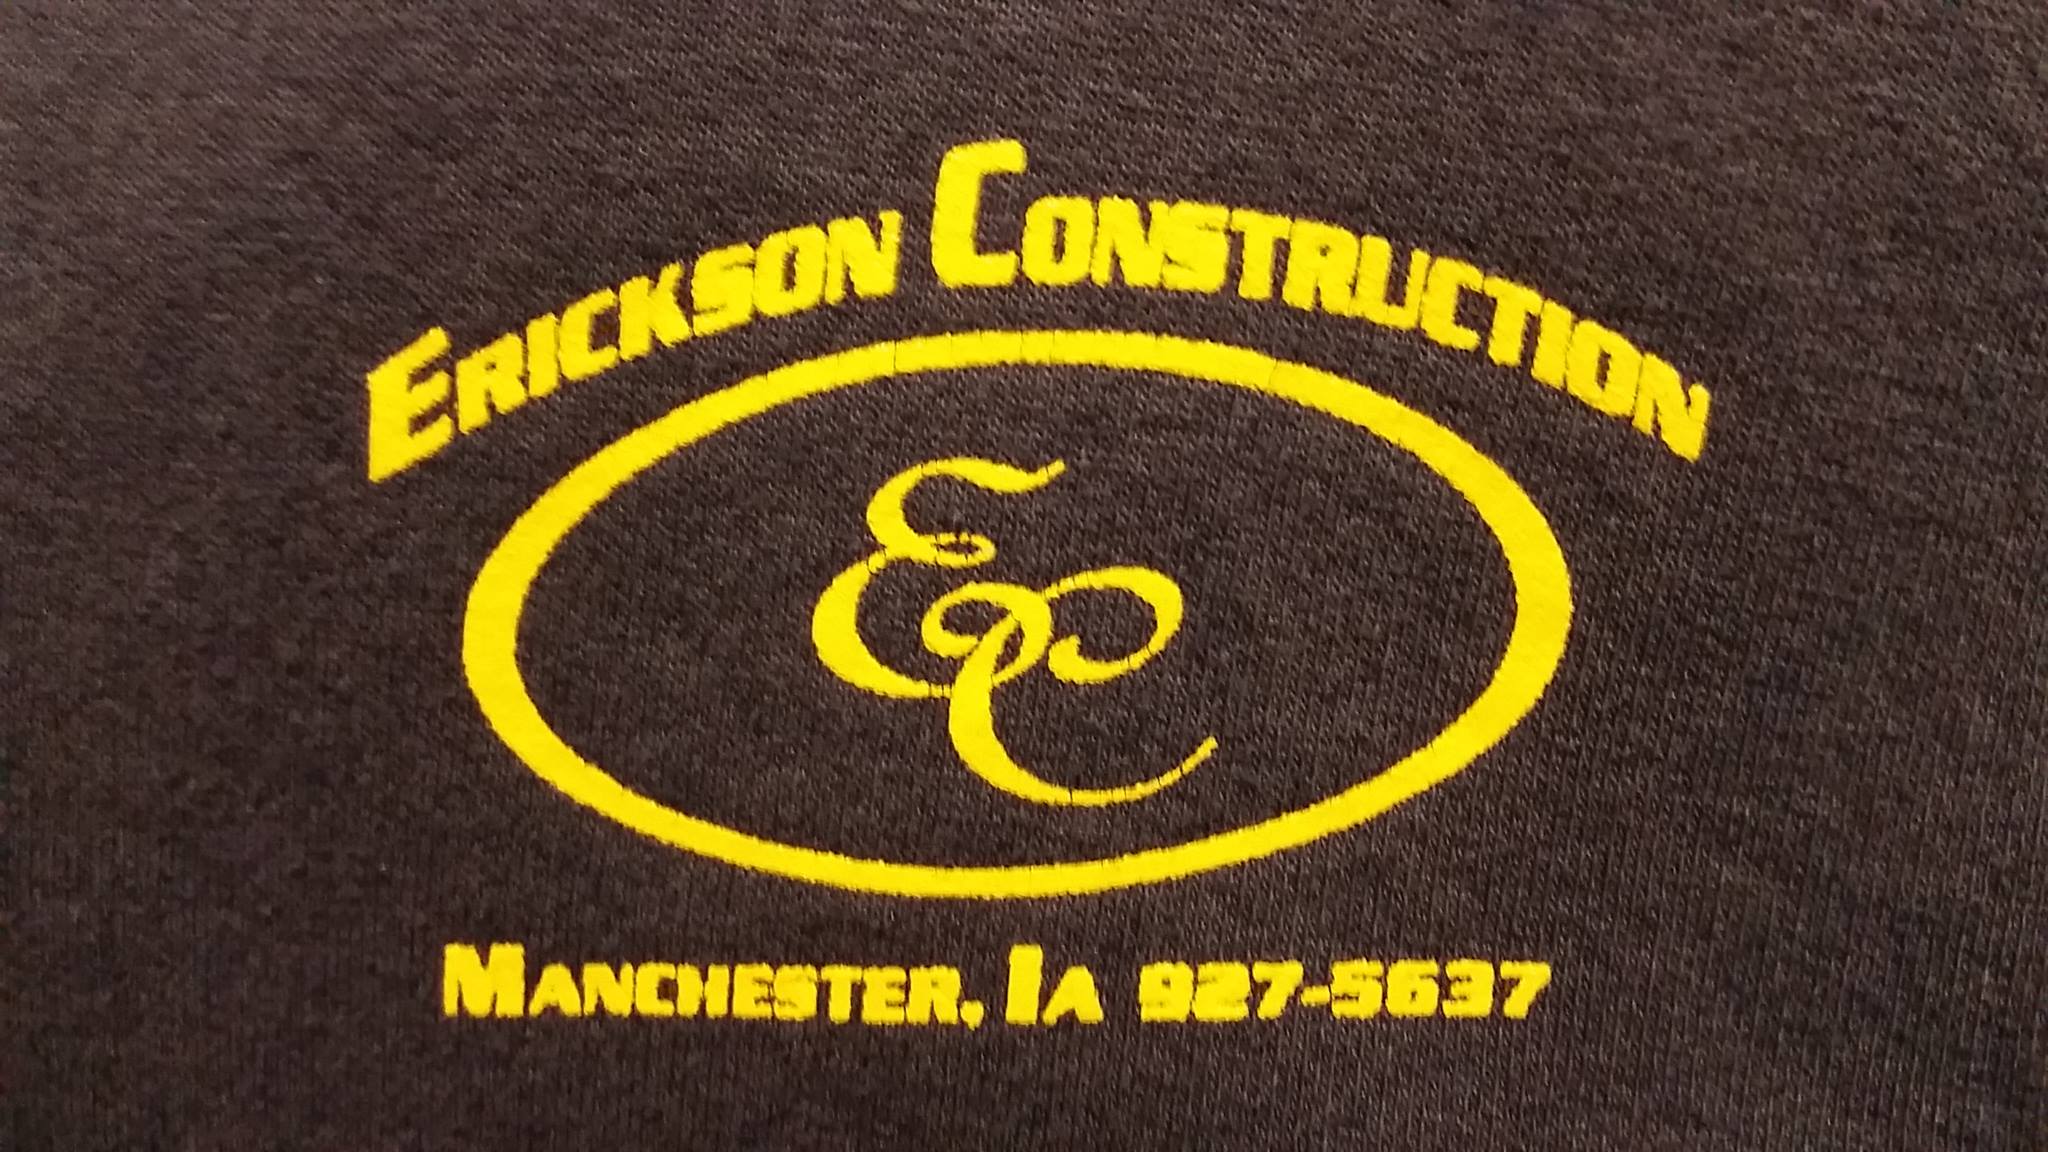 Erickson Construction LLC 18080 224th St, Manchester Iowa 52057